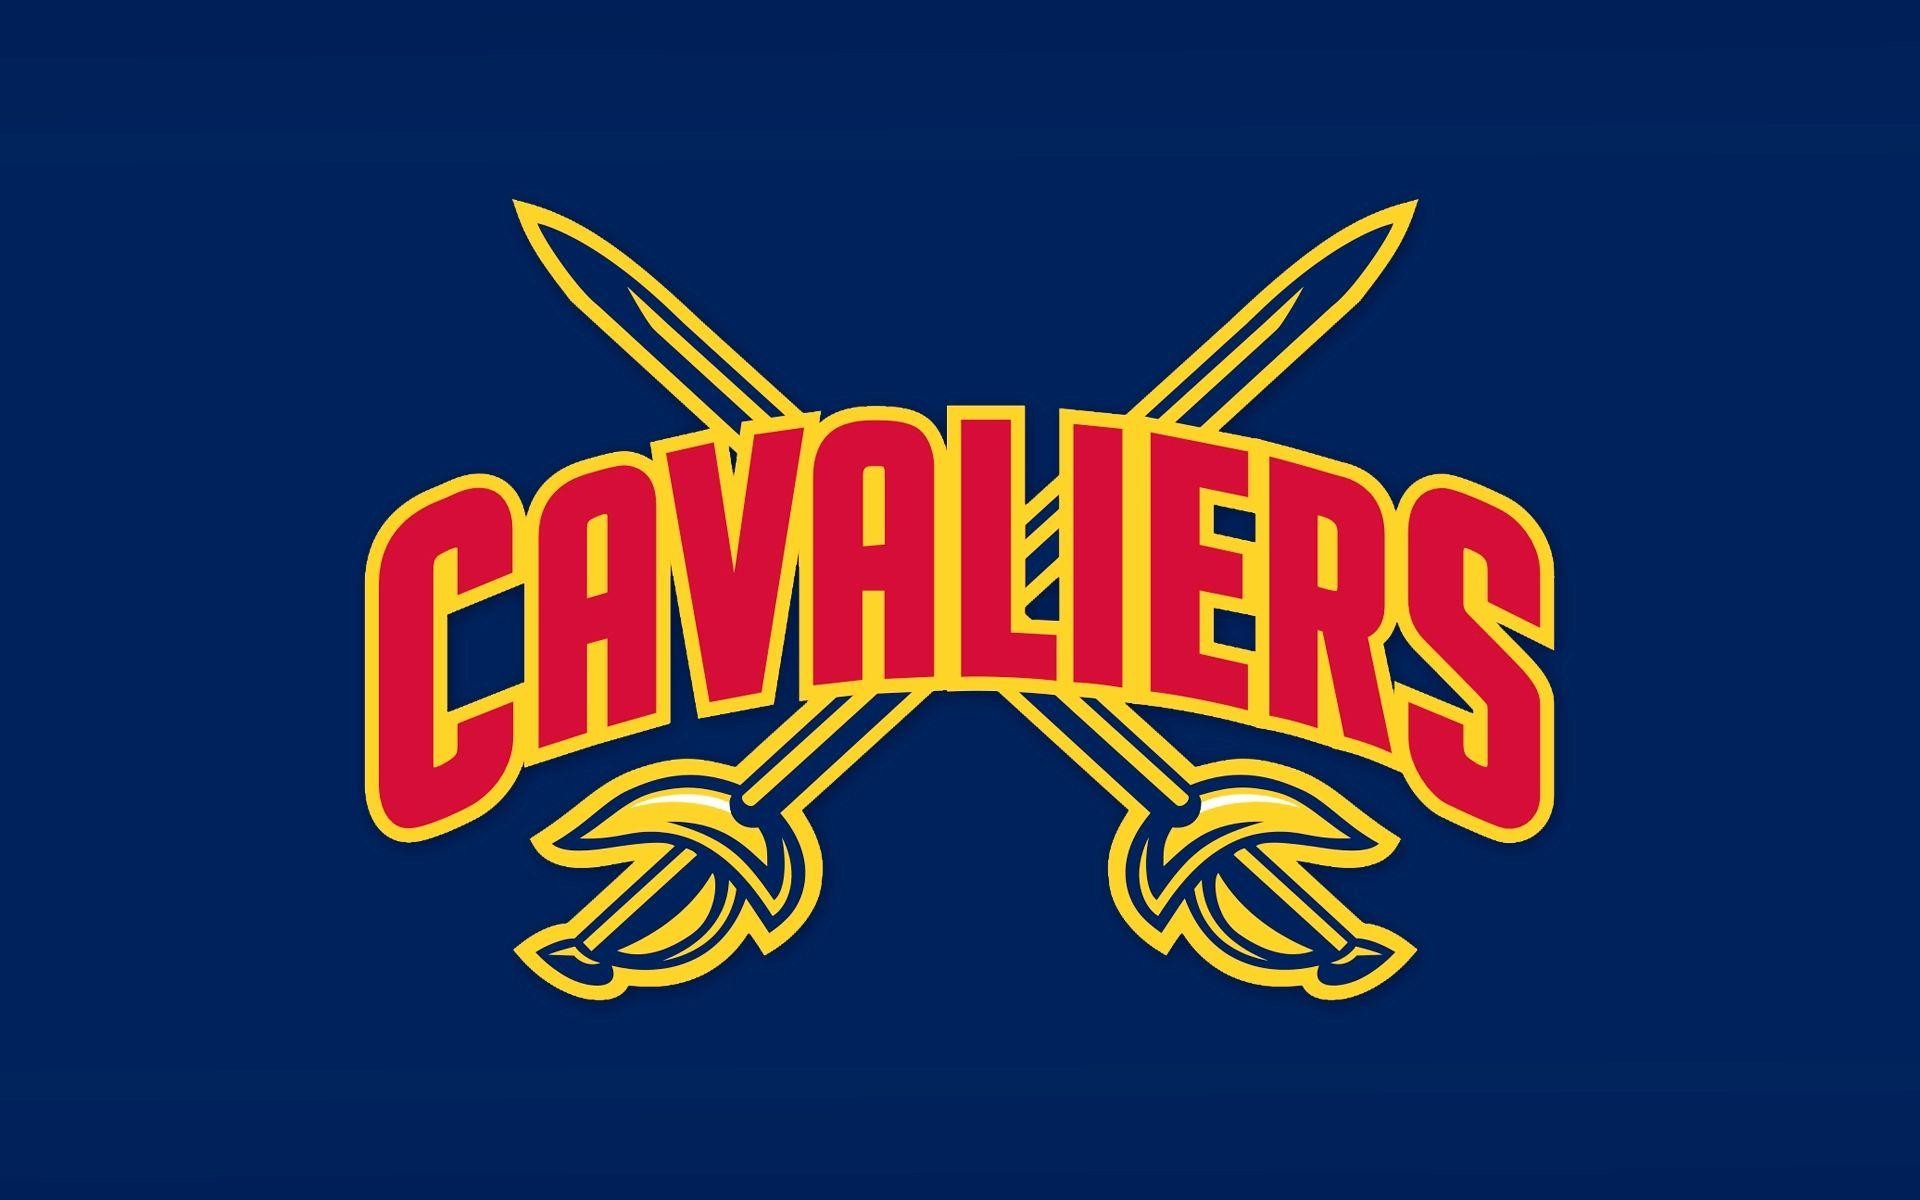 1920x1200 Cleveland Cavaliers Logo Wallpaper Basketball Team | NBA to Days .